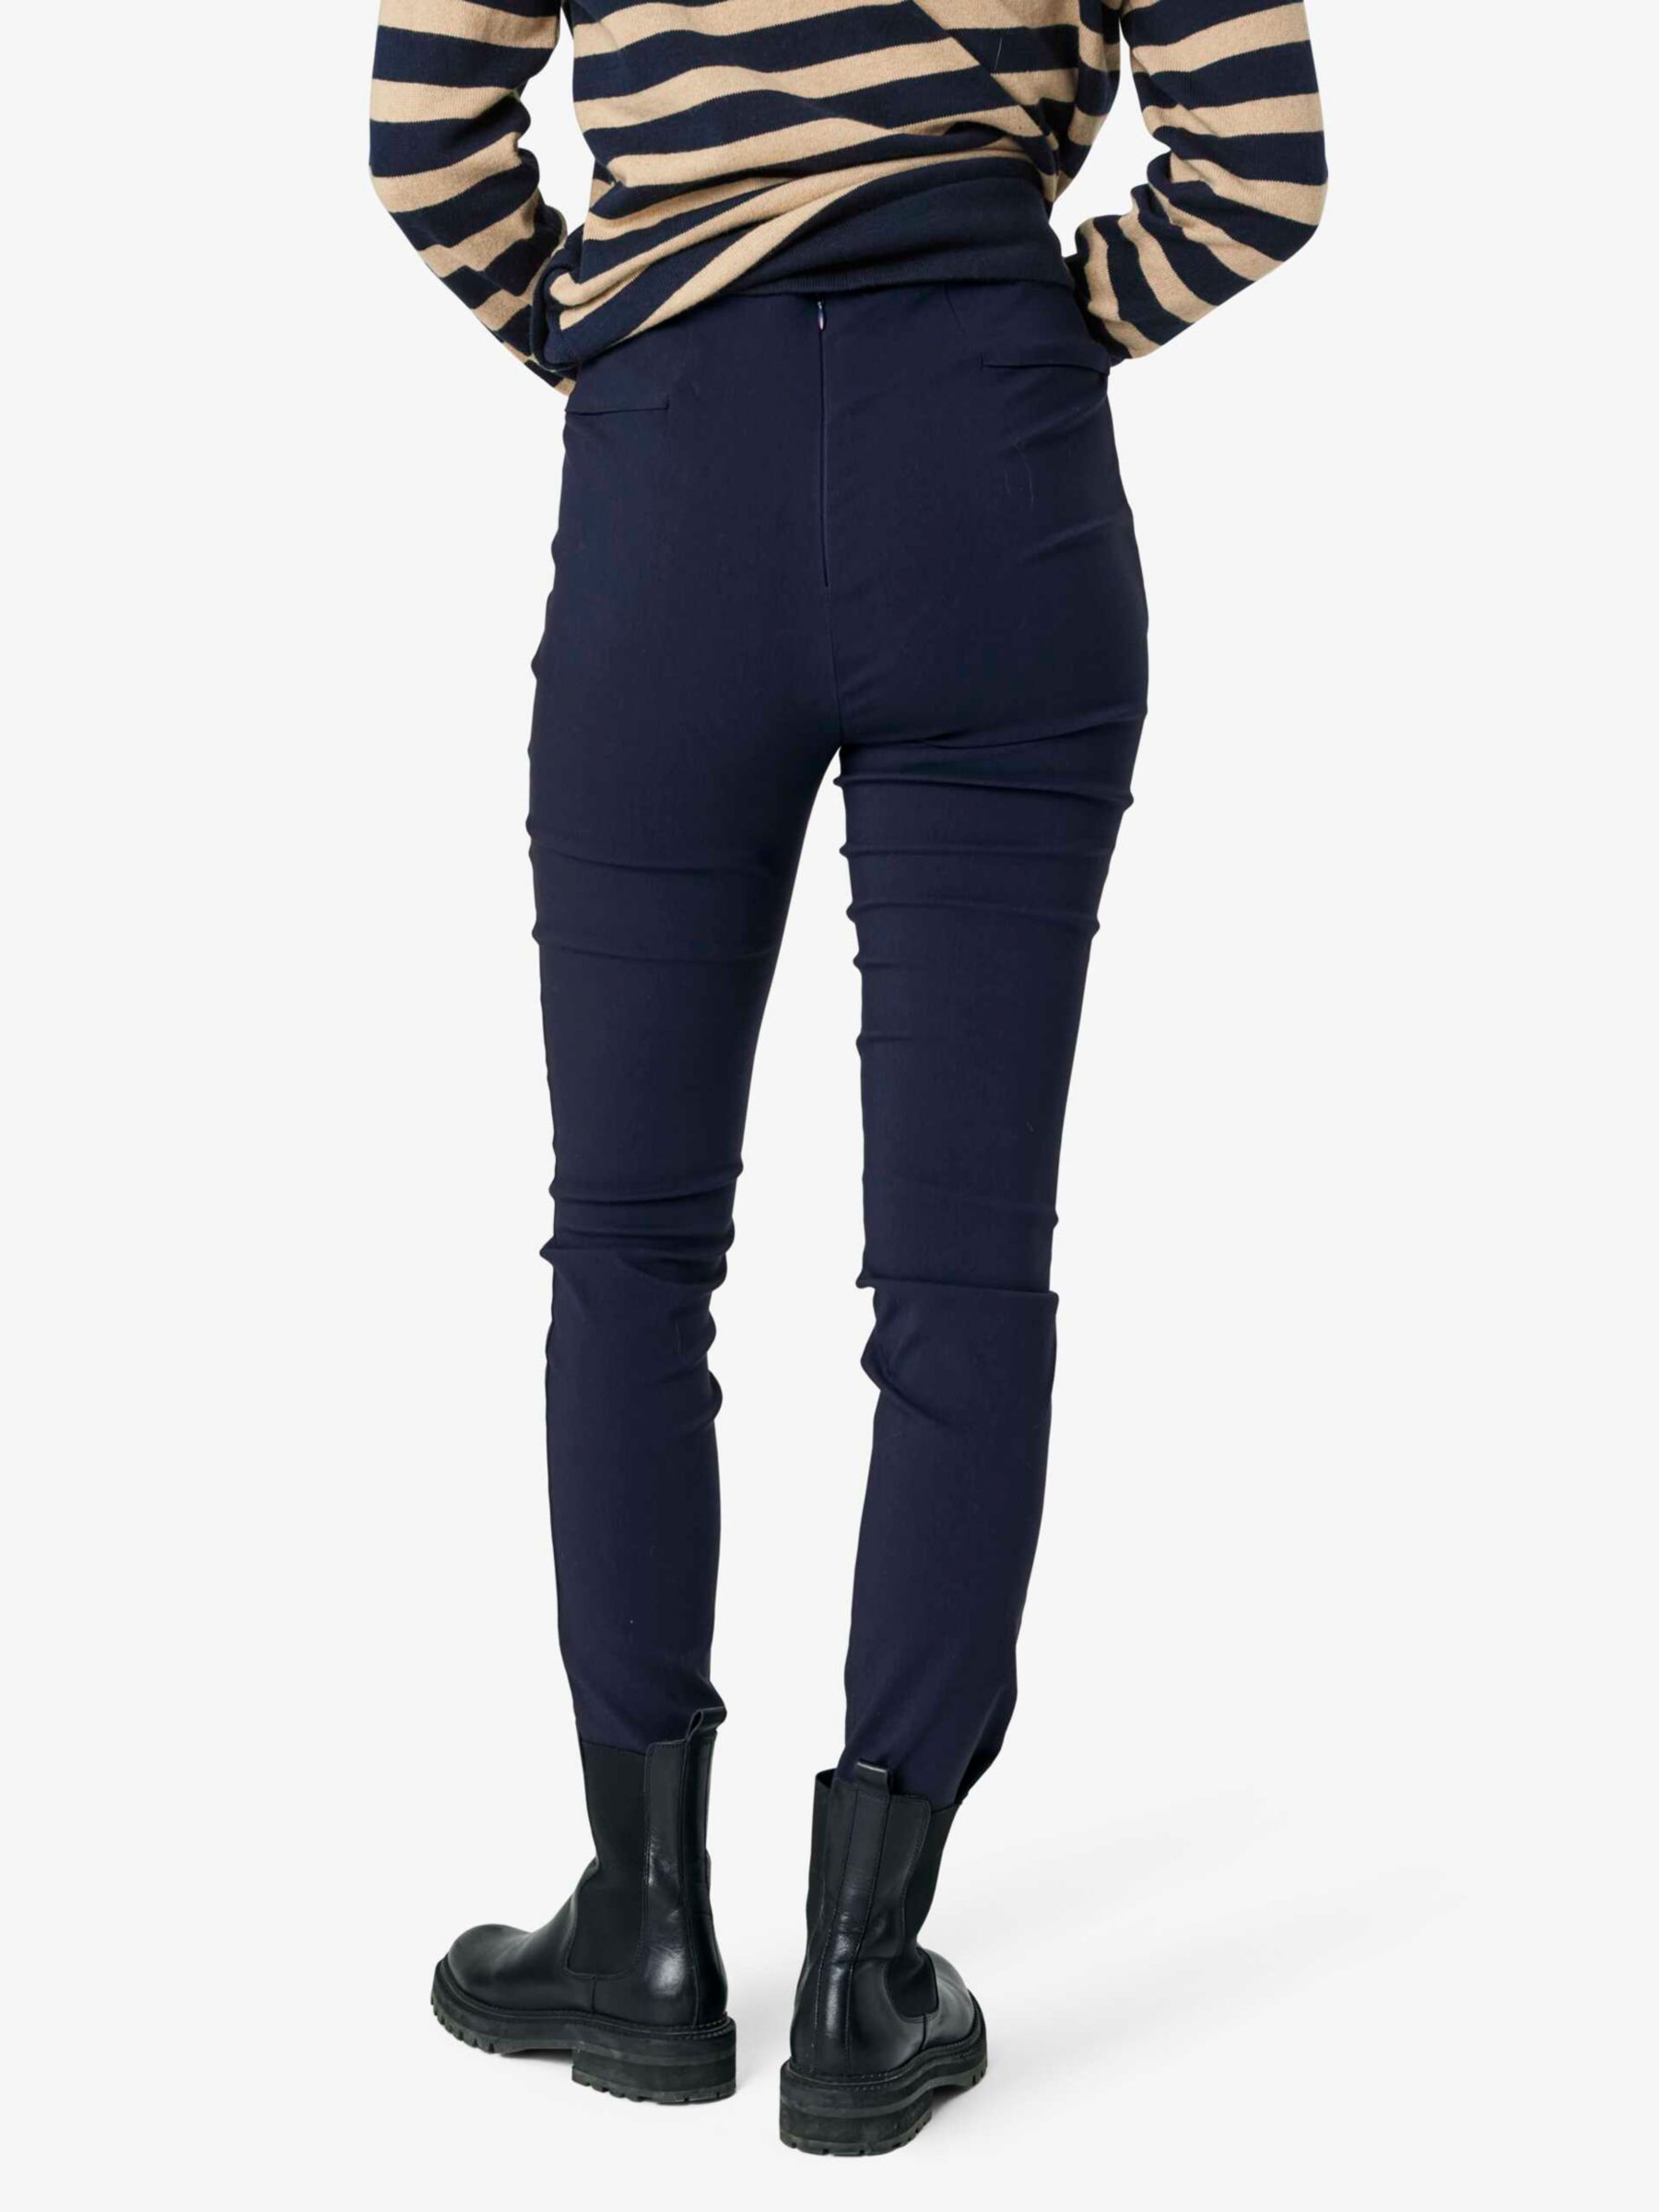 Buy Noa Noa Allis Skinny Trousers Online at johnlewis.com